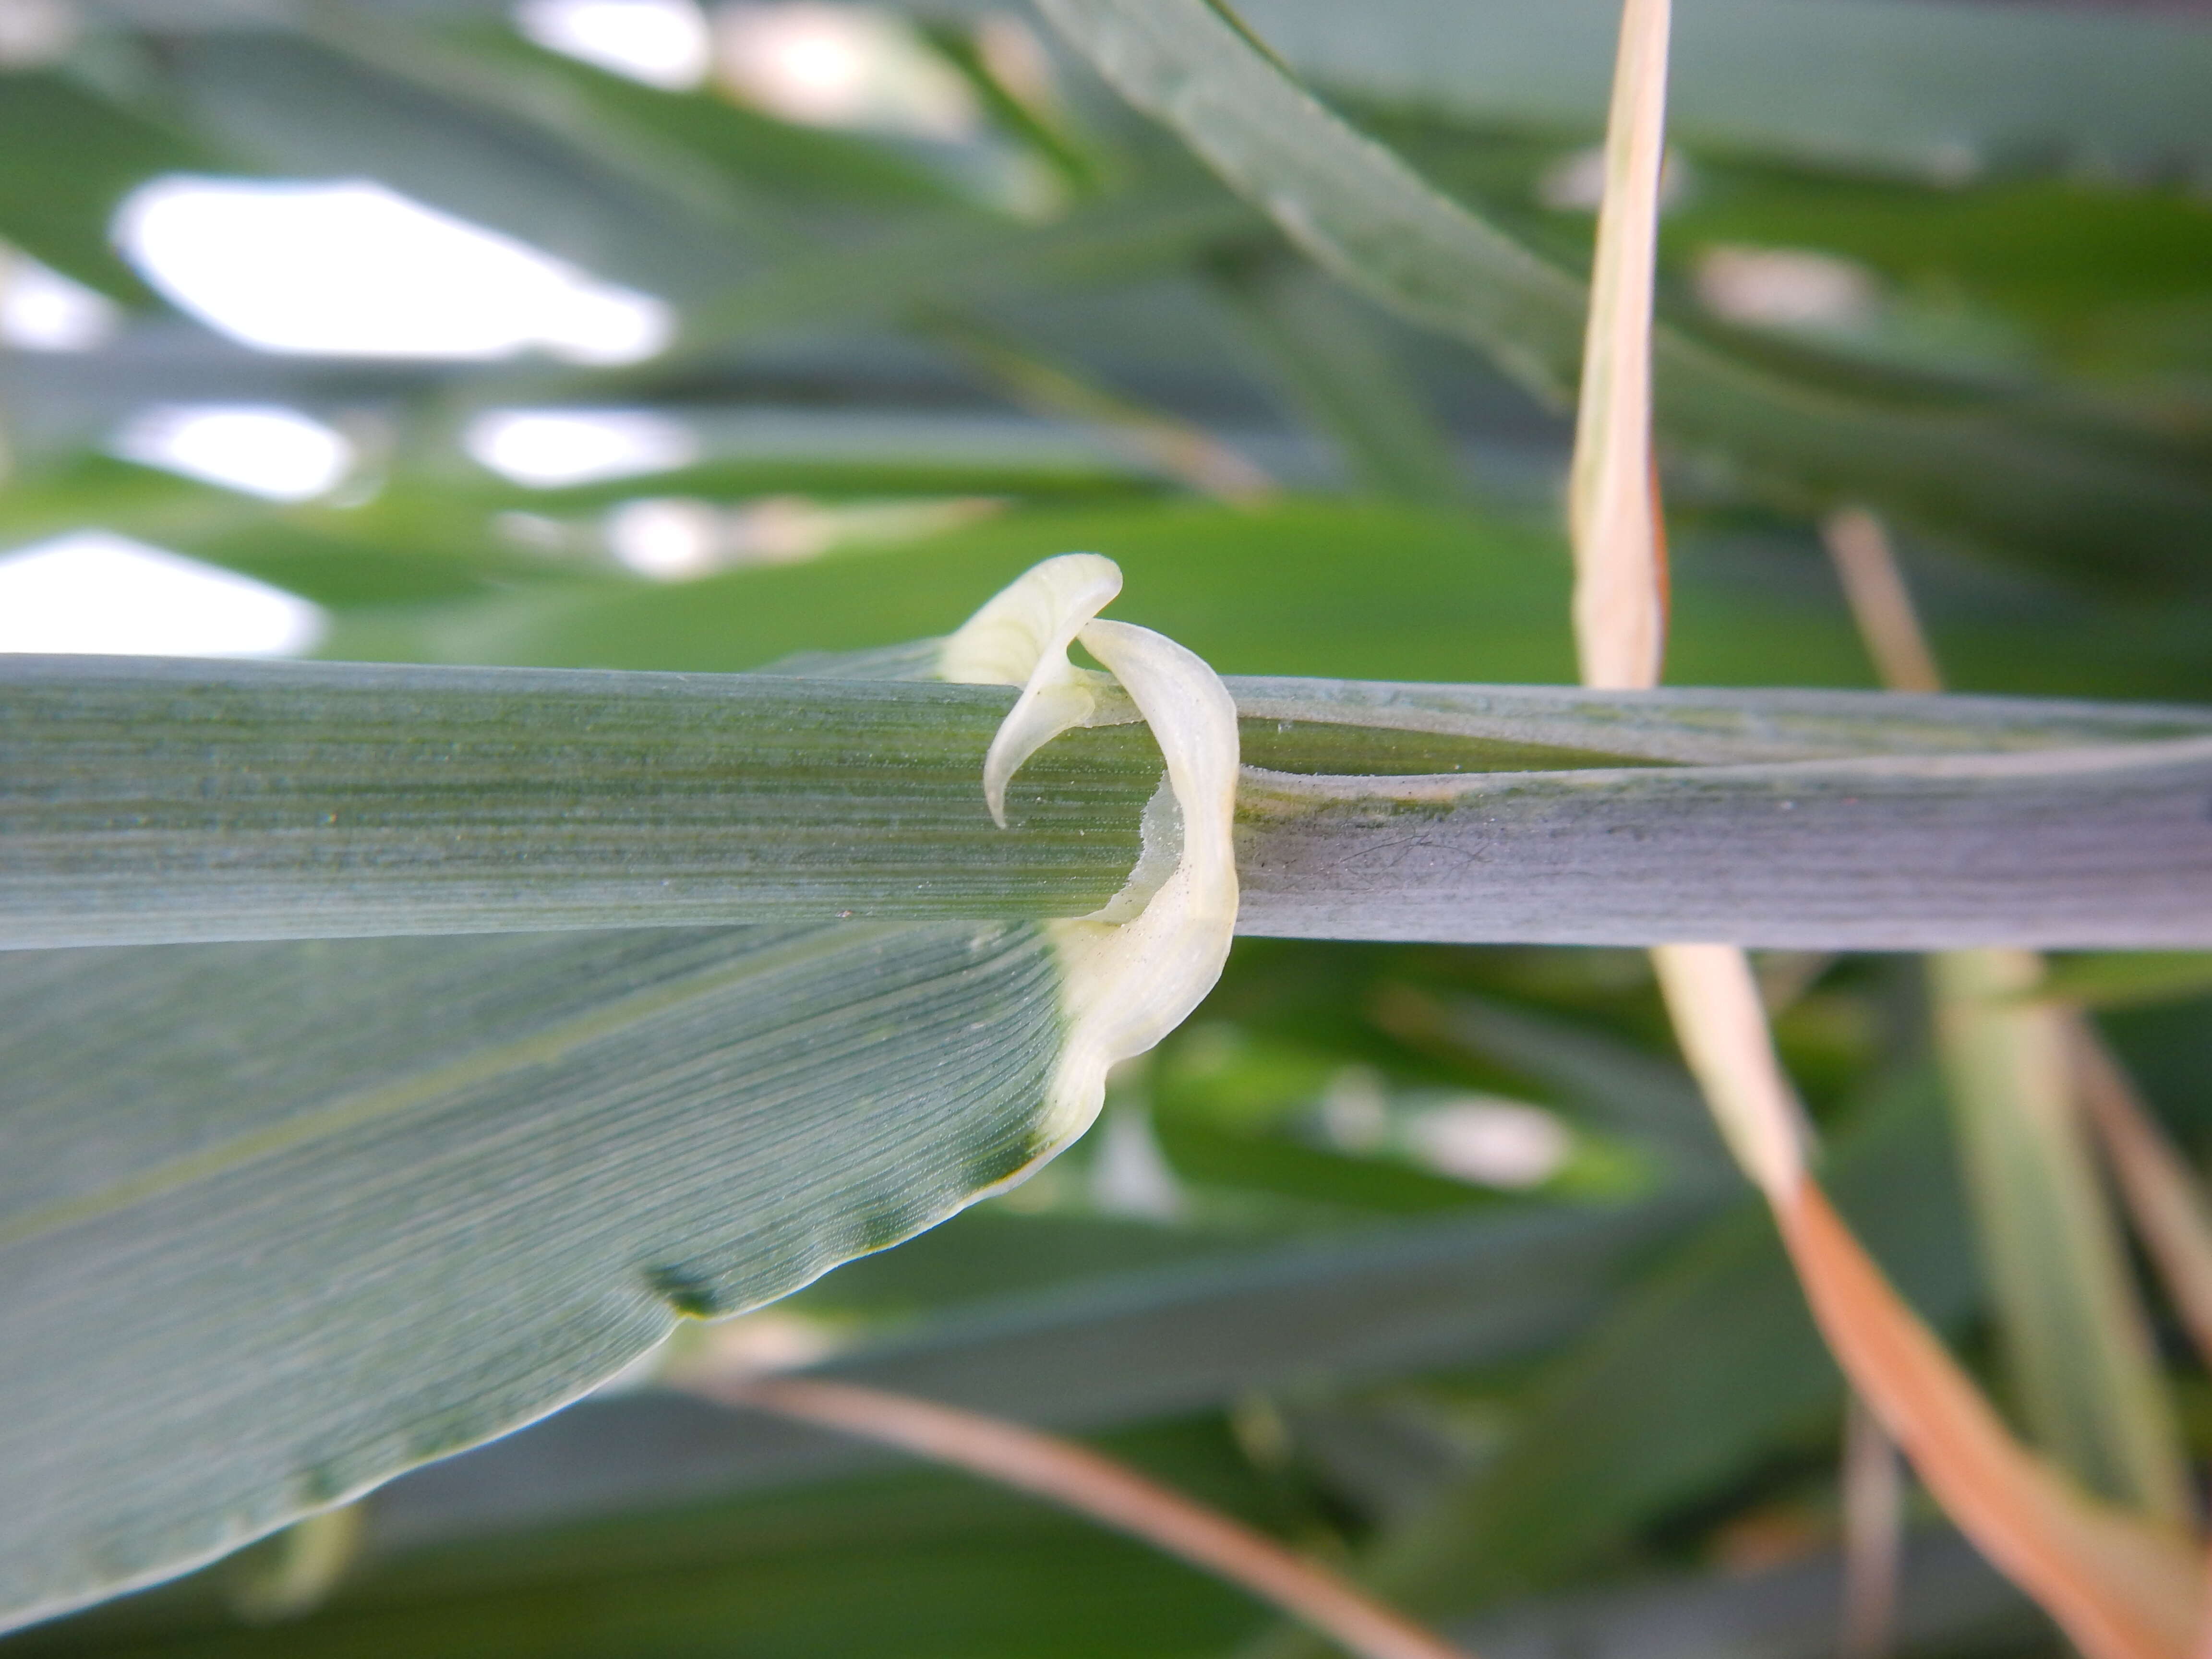 Image of common barley